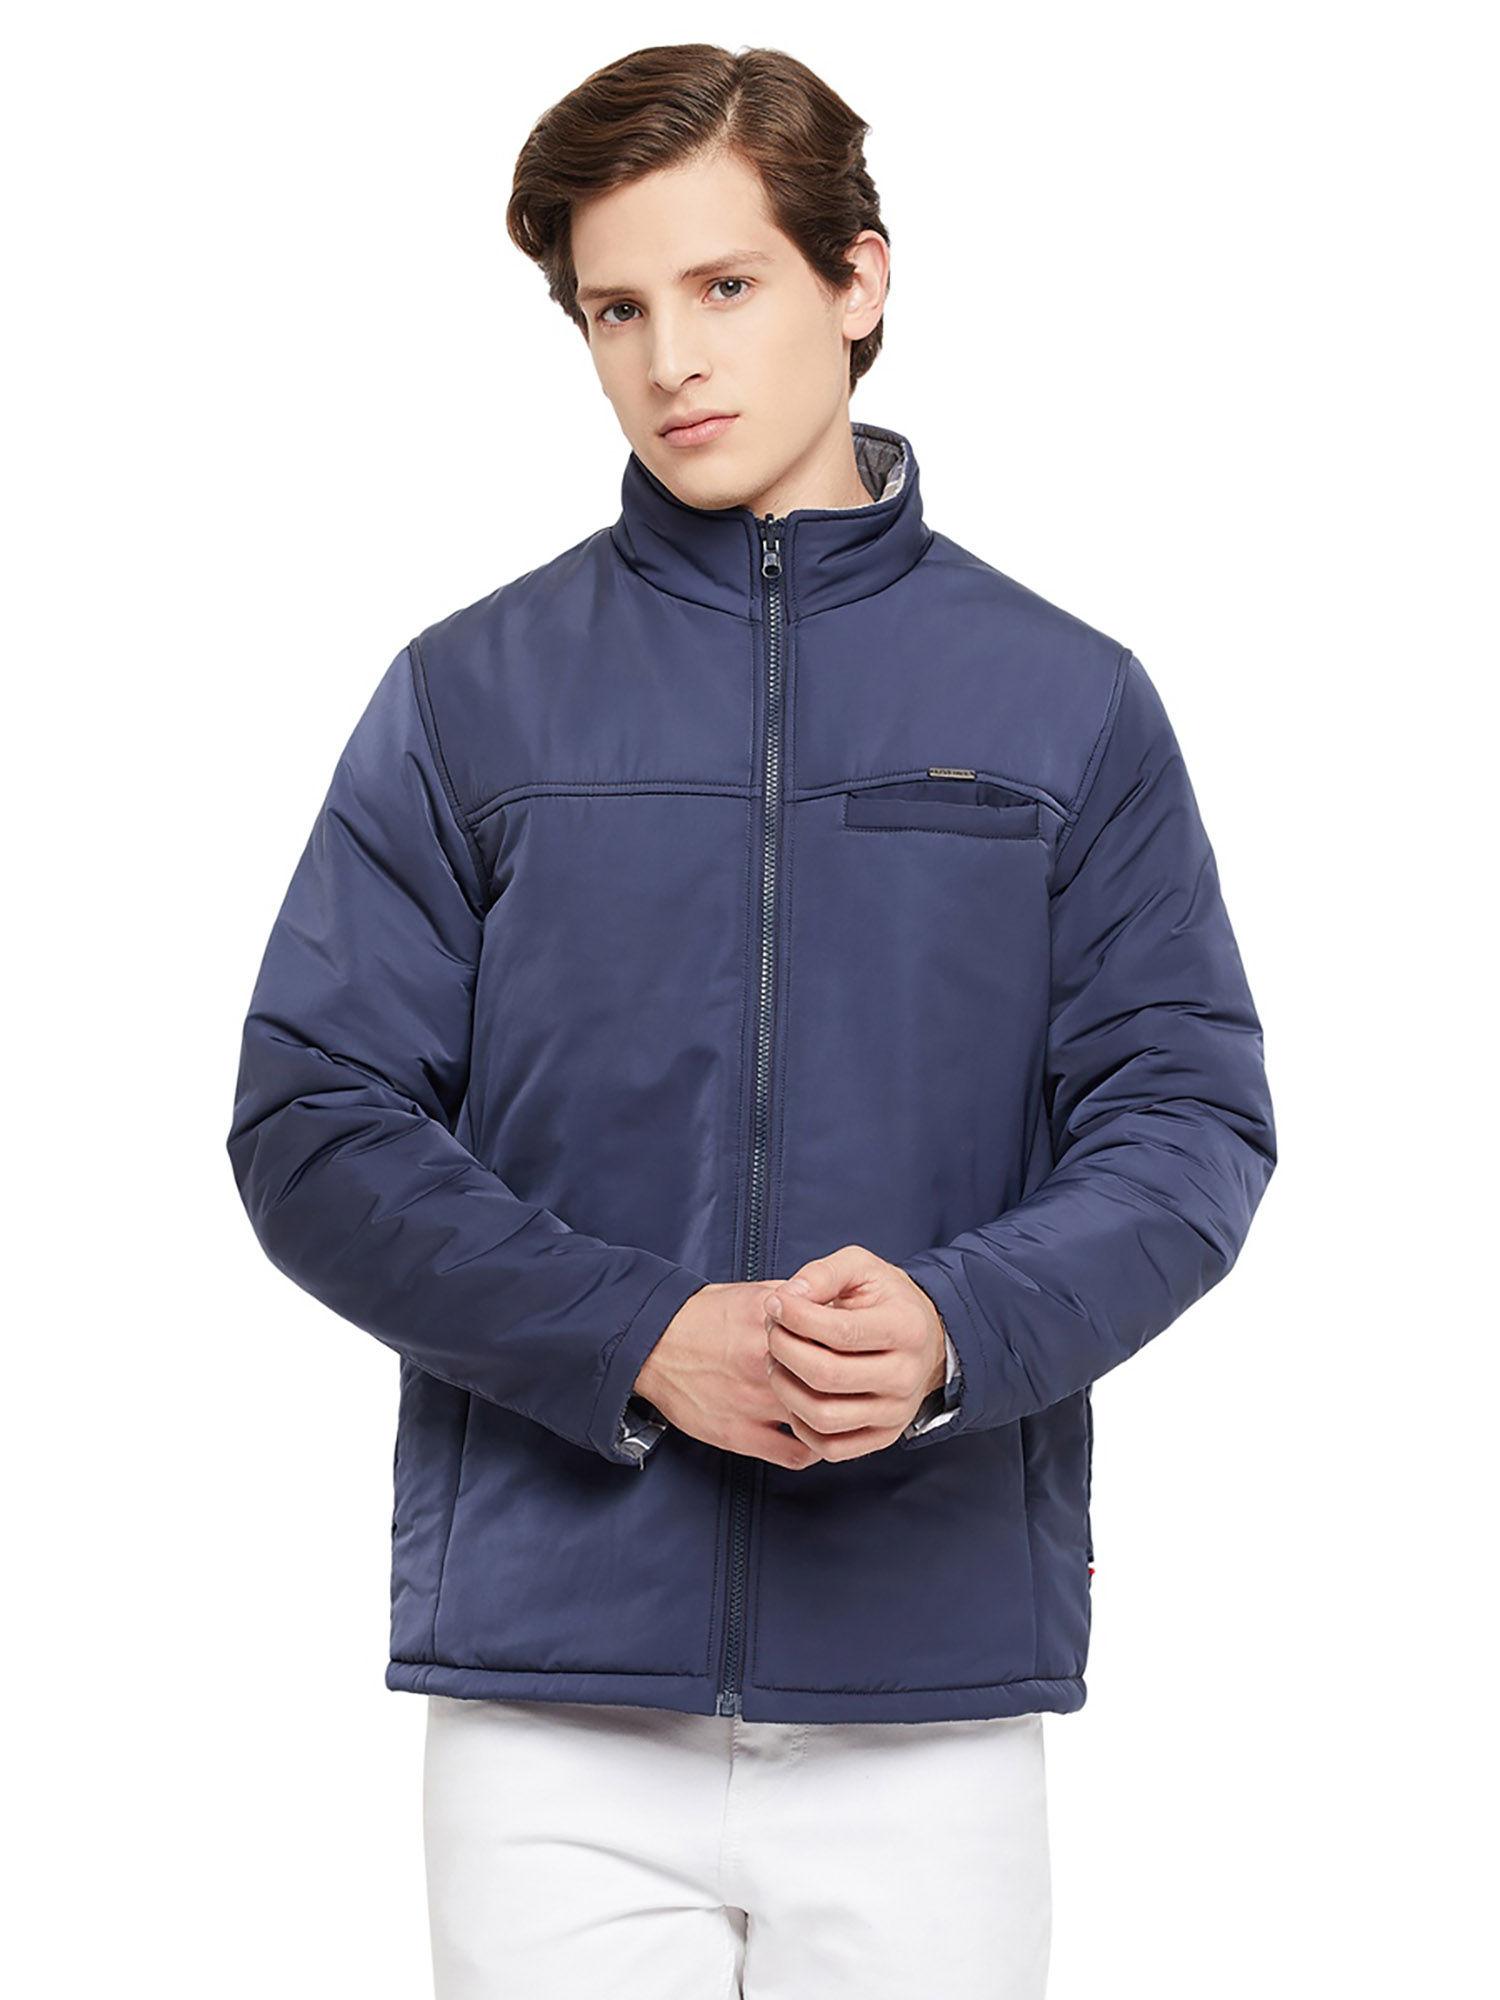 mens reversible full sleeve zipper jacket